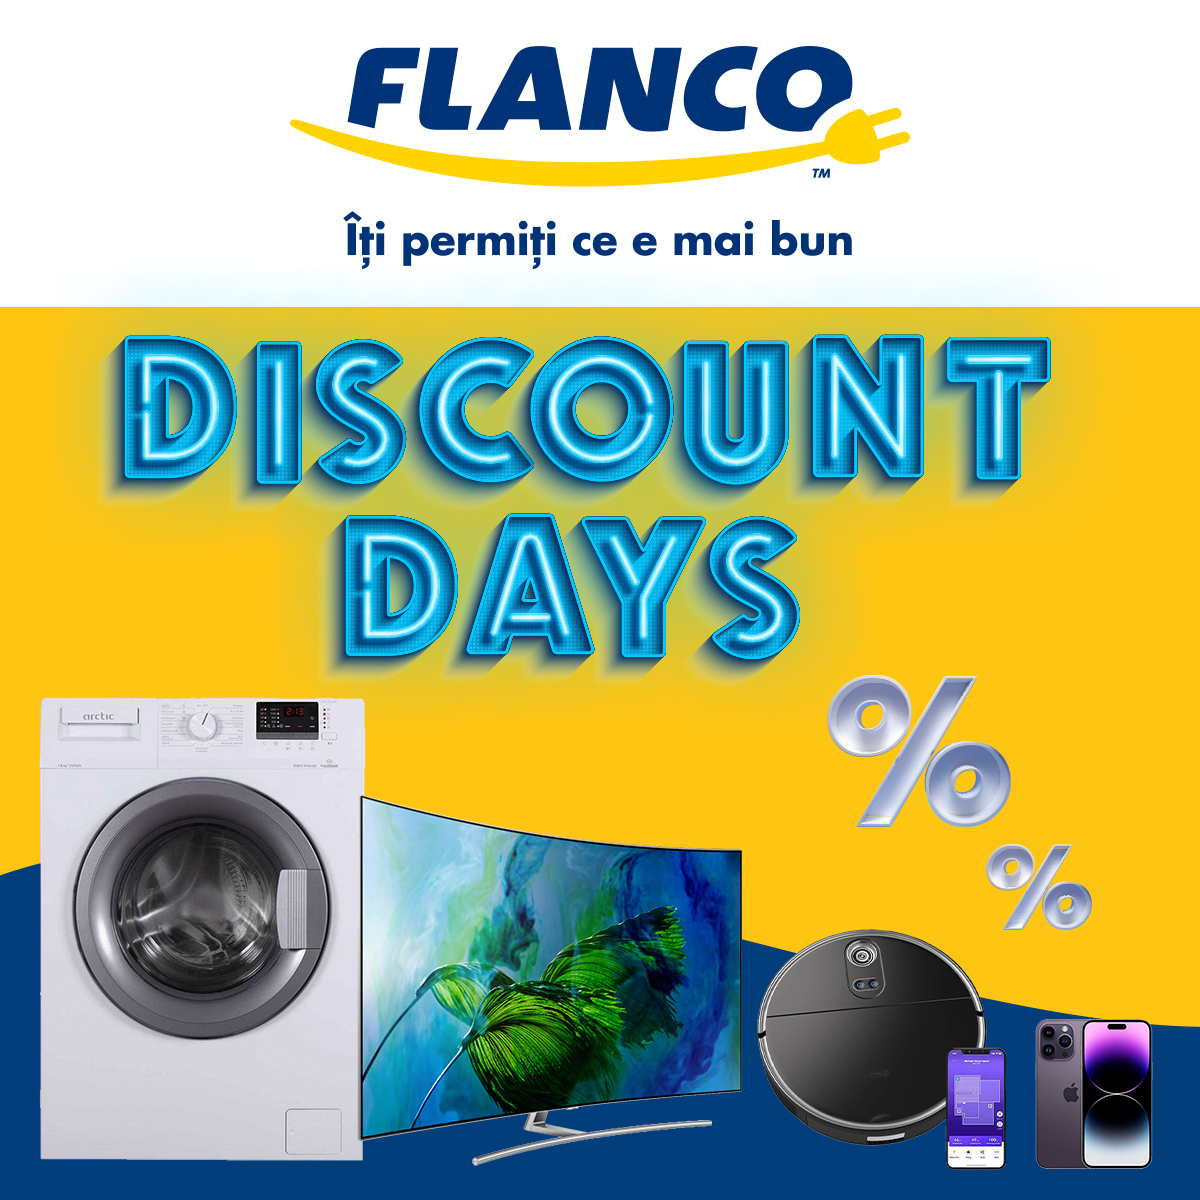 Flanco - DISCOUNT DAYS